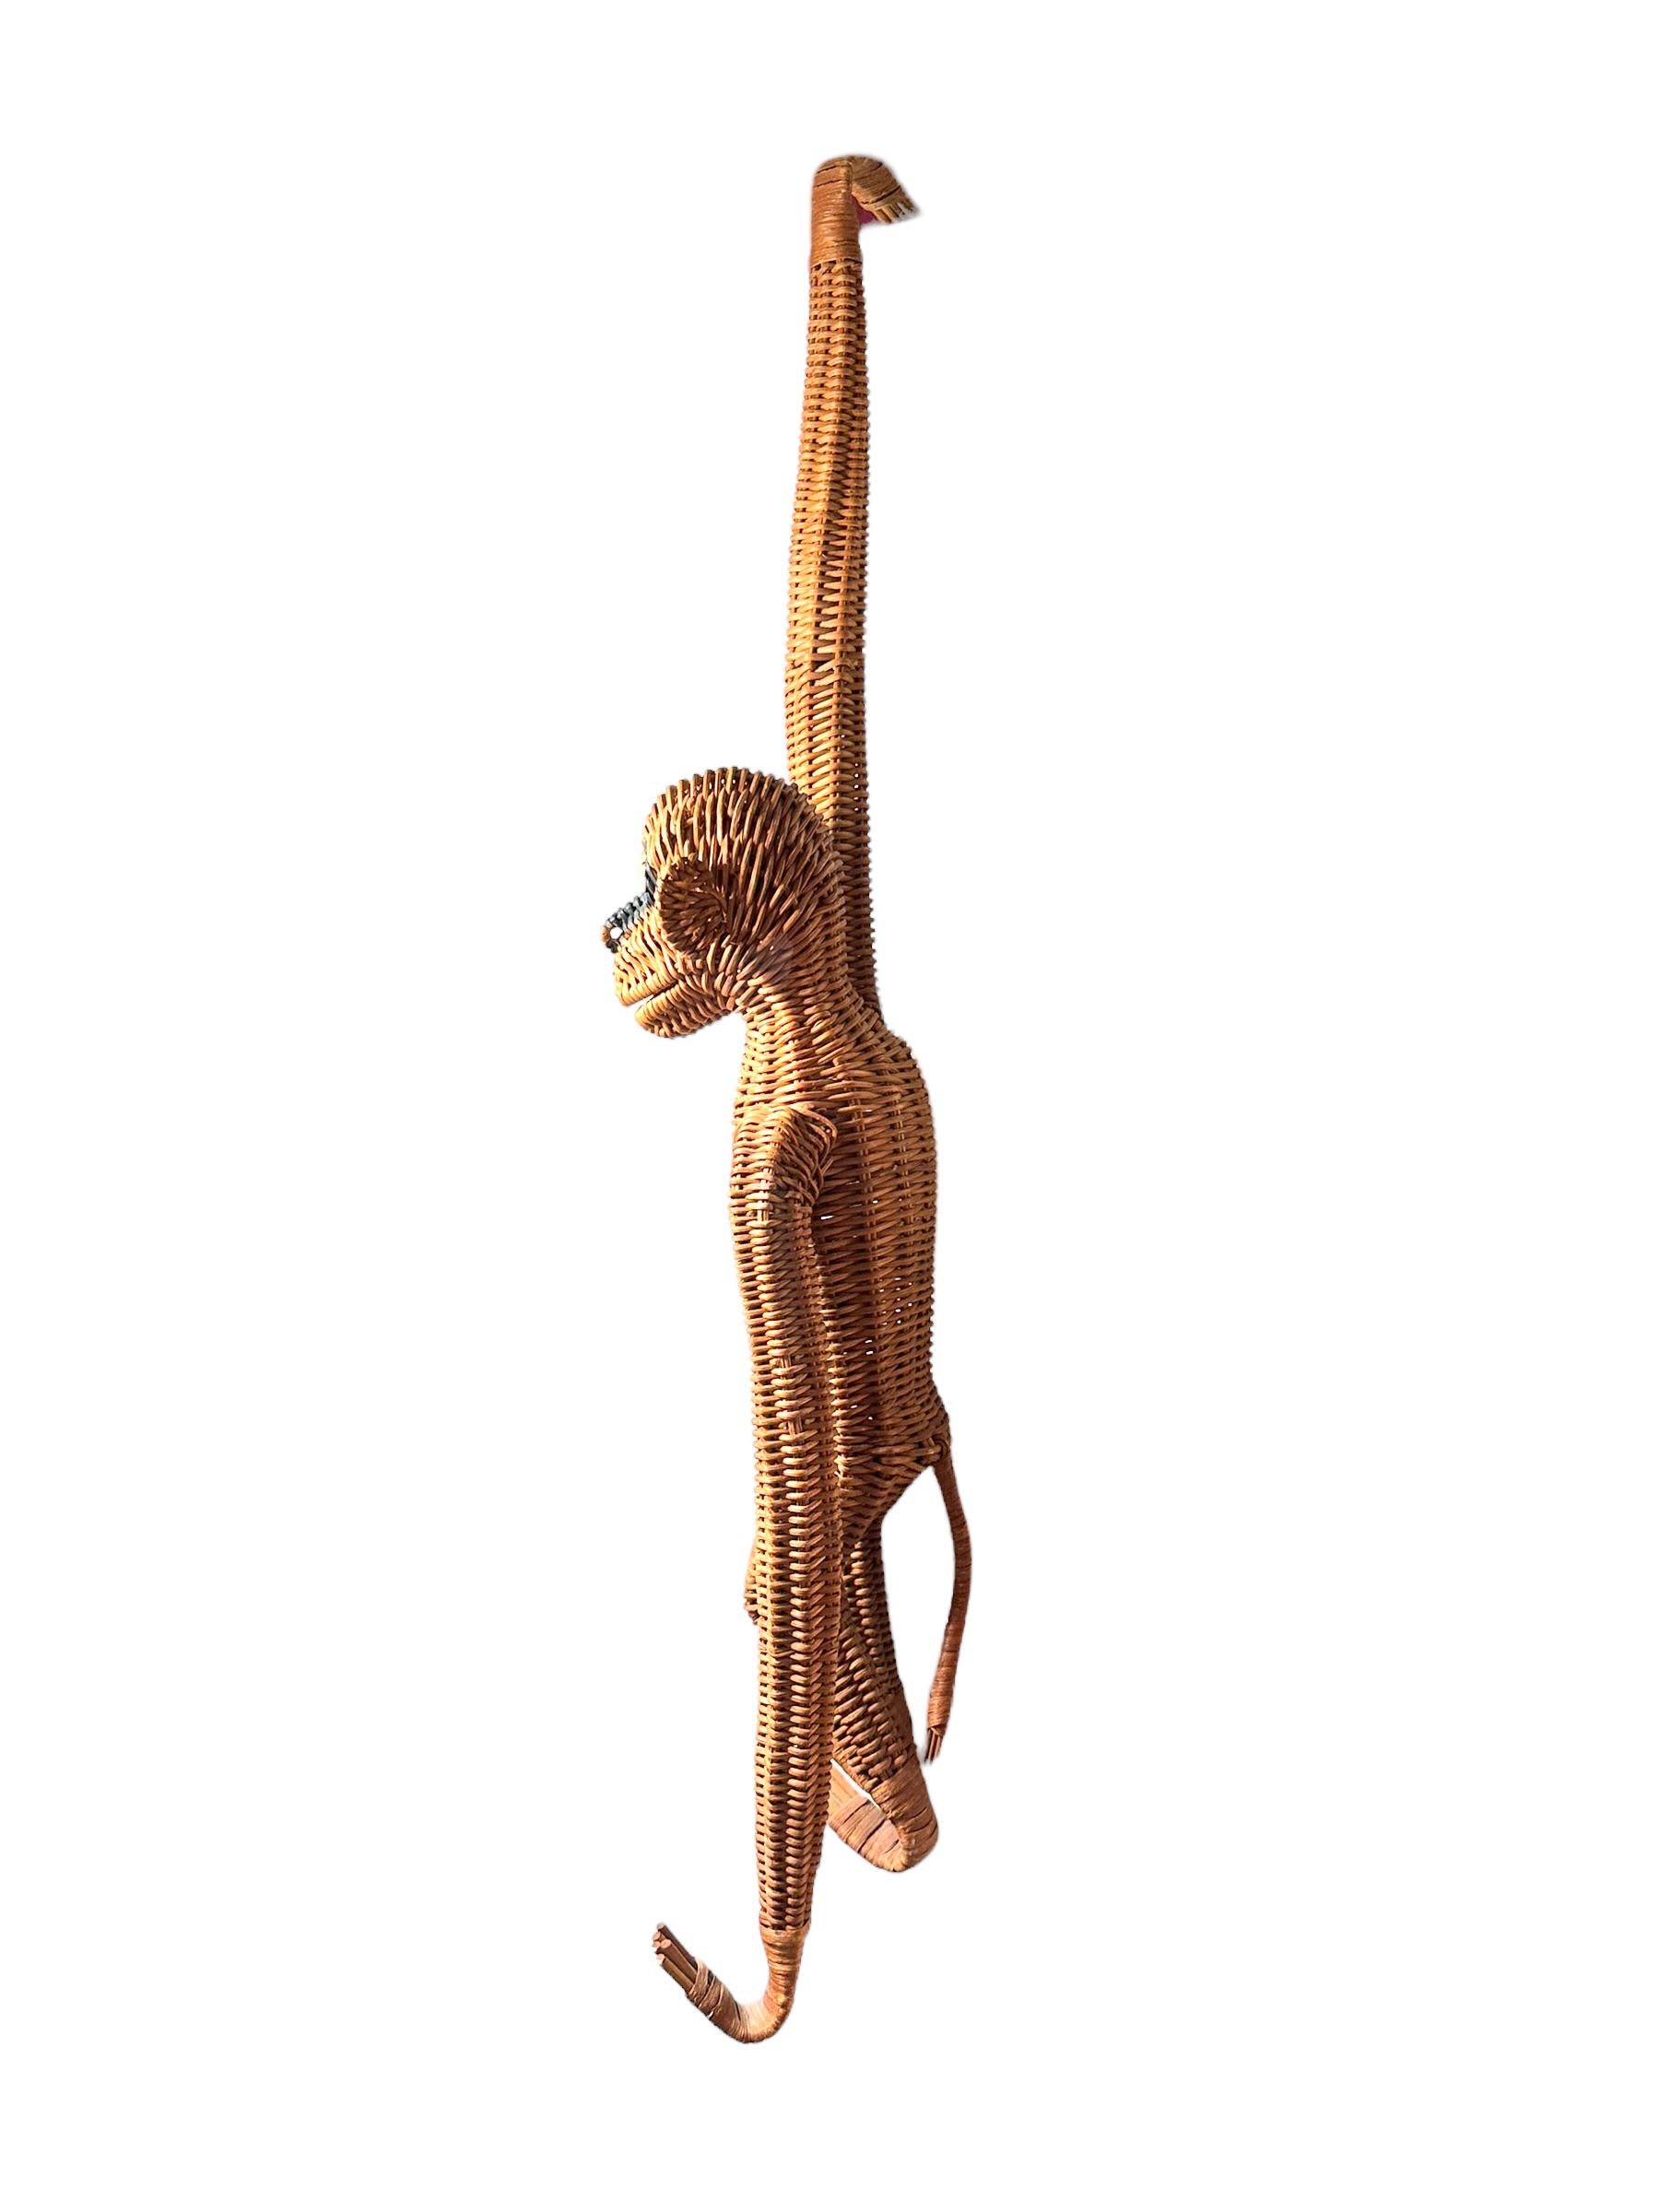 Mid-Century Modern Monkey Ape Rattan Wicker Hanging Figure 1970s, France For Sale 10